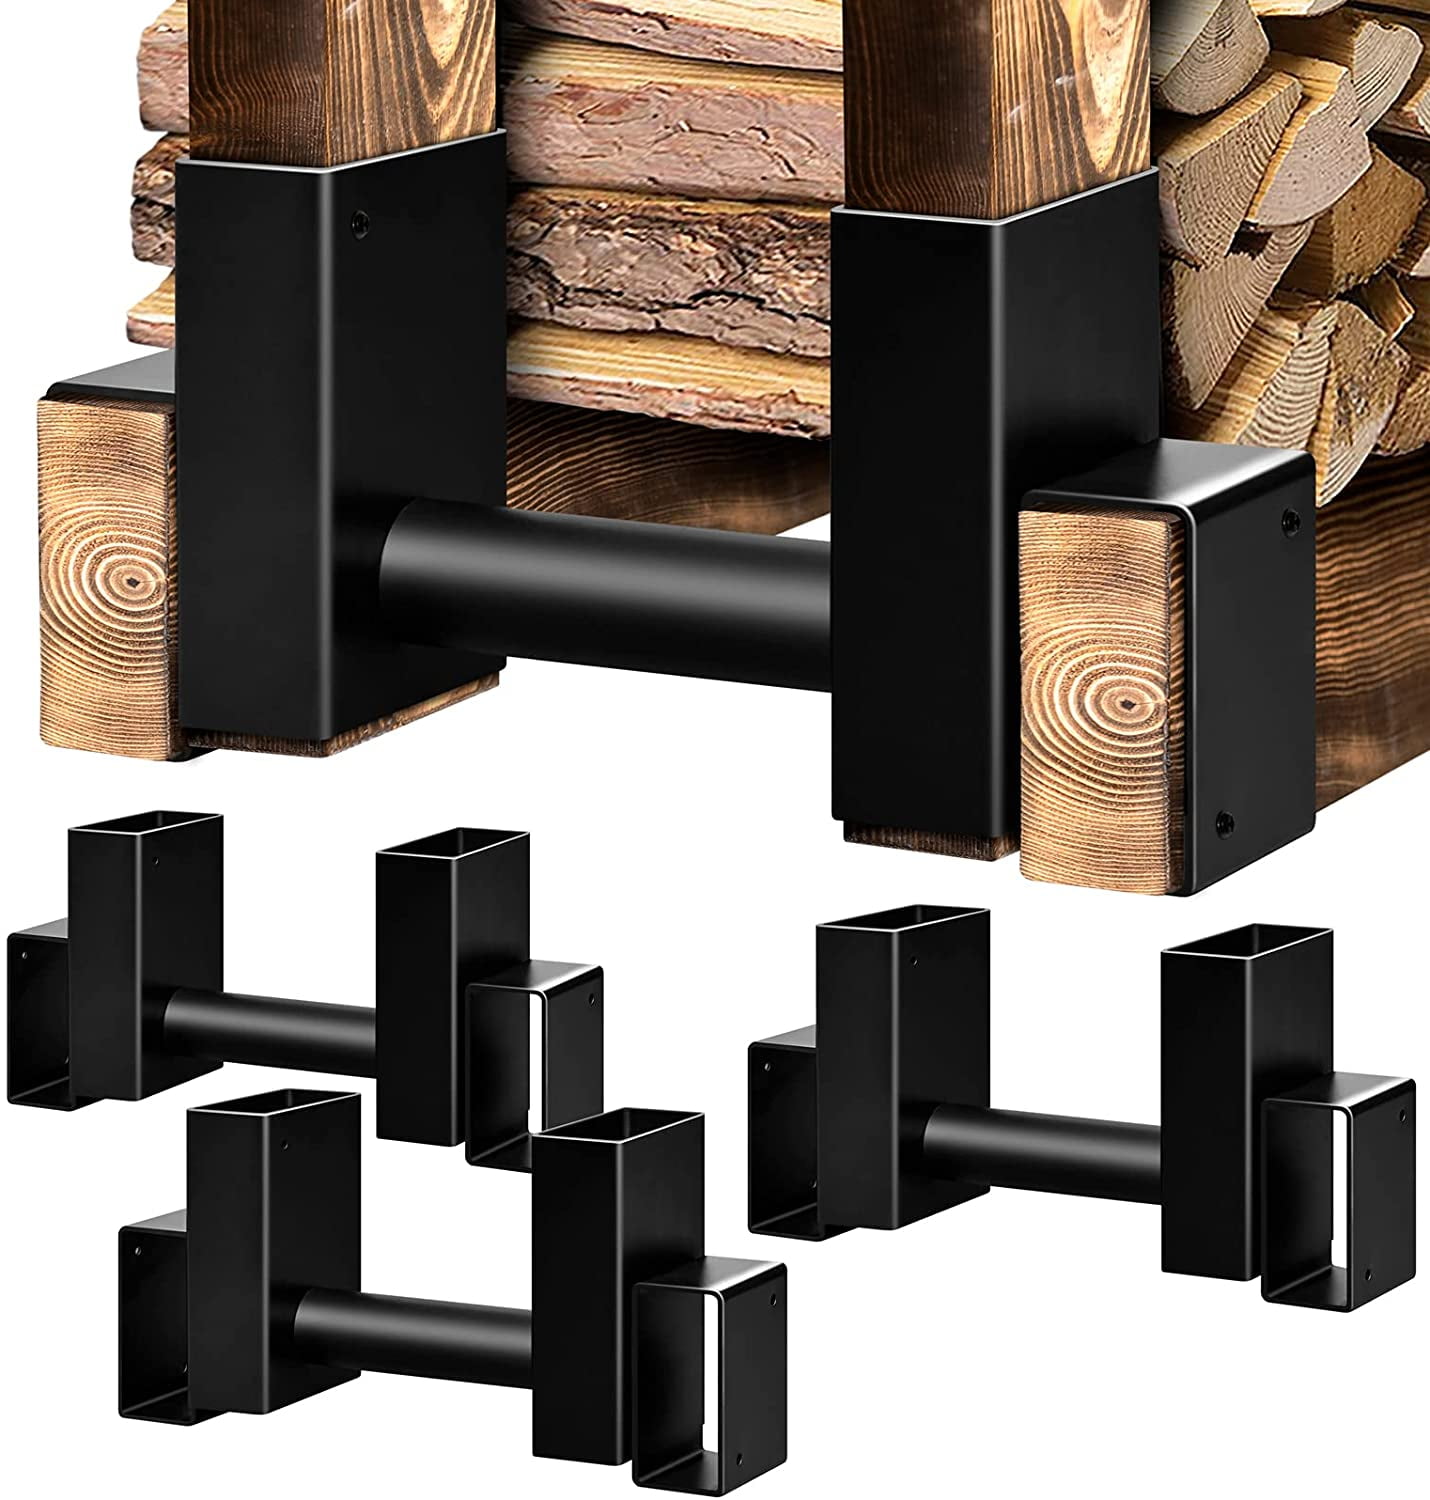 2PCS Fireplace Wood Storage Holder Adjustable to Any Length Black JeemeeSpace Outdoor Firewood Rack Bracket Kit